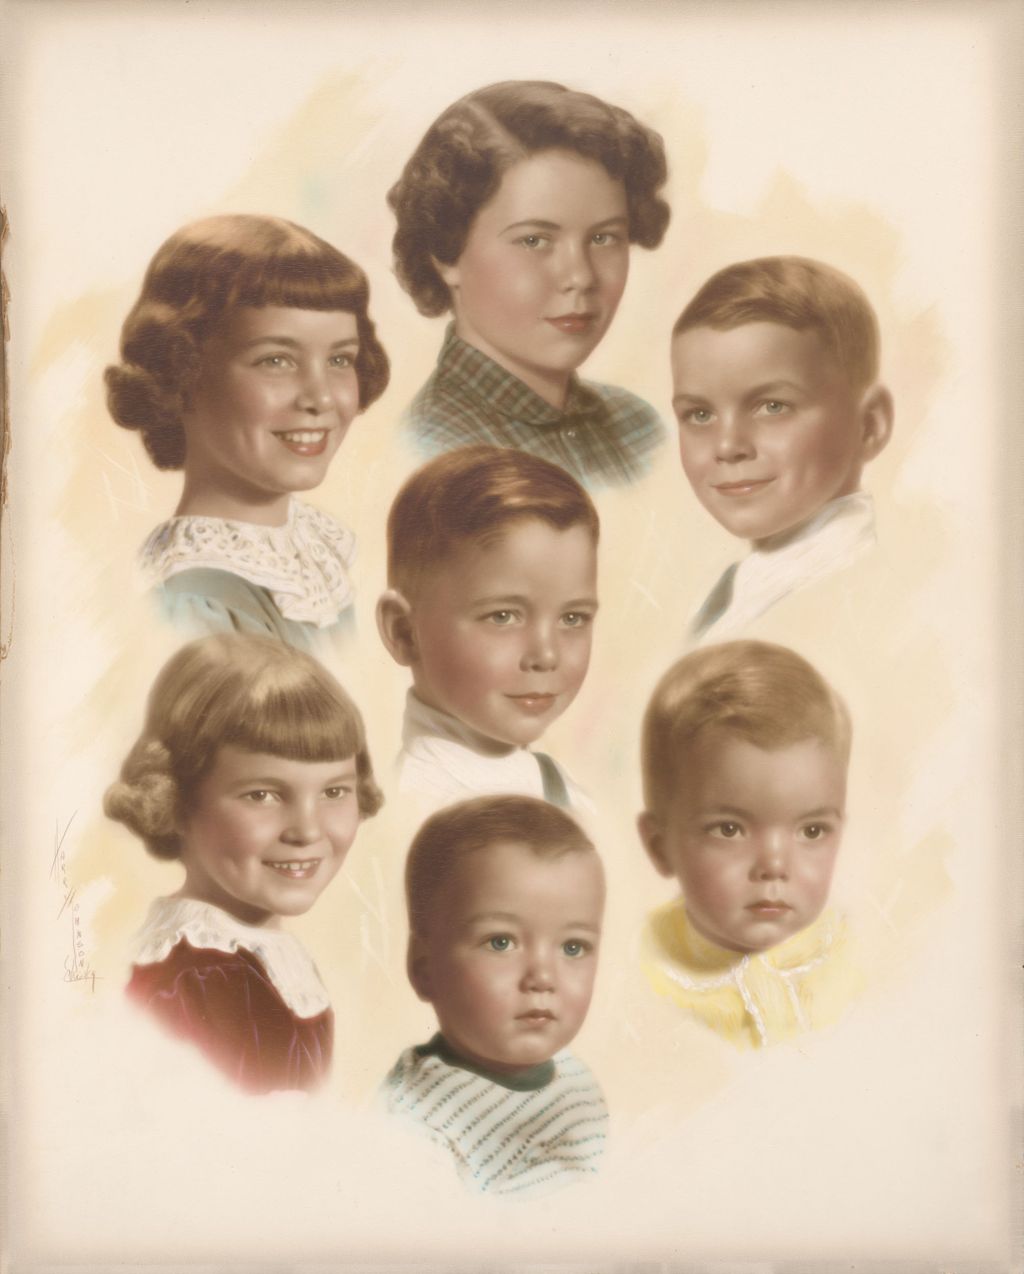 Miniature of Richard J. Daley's children